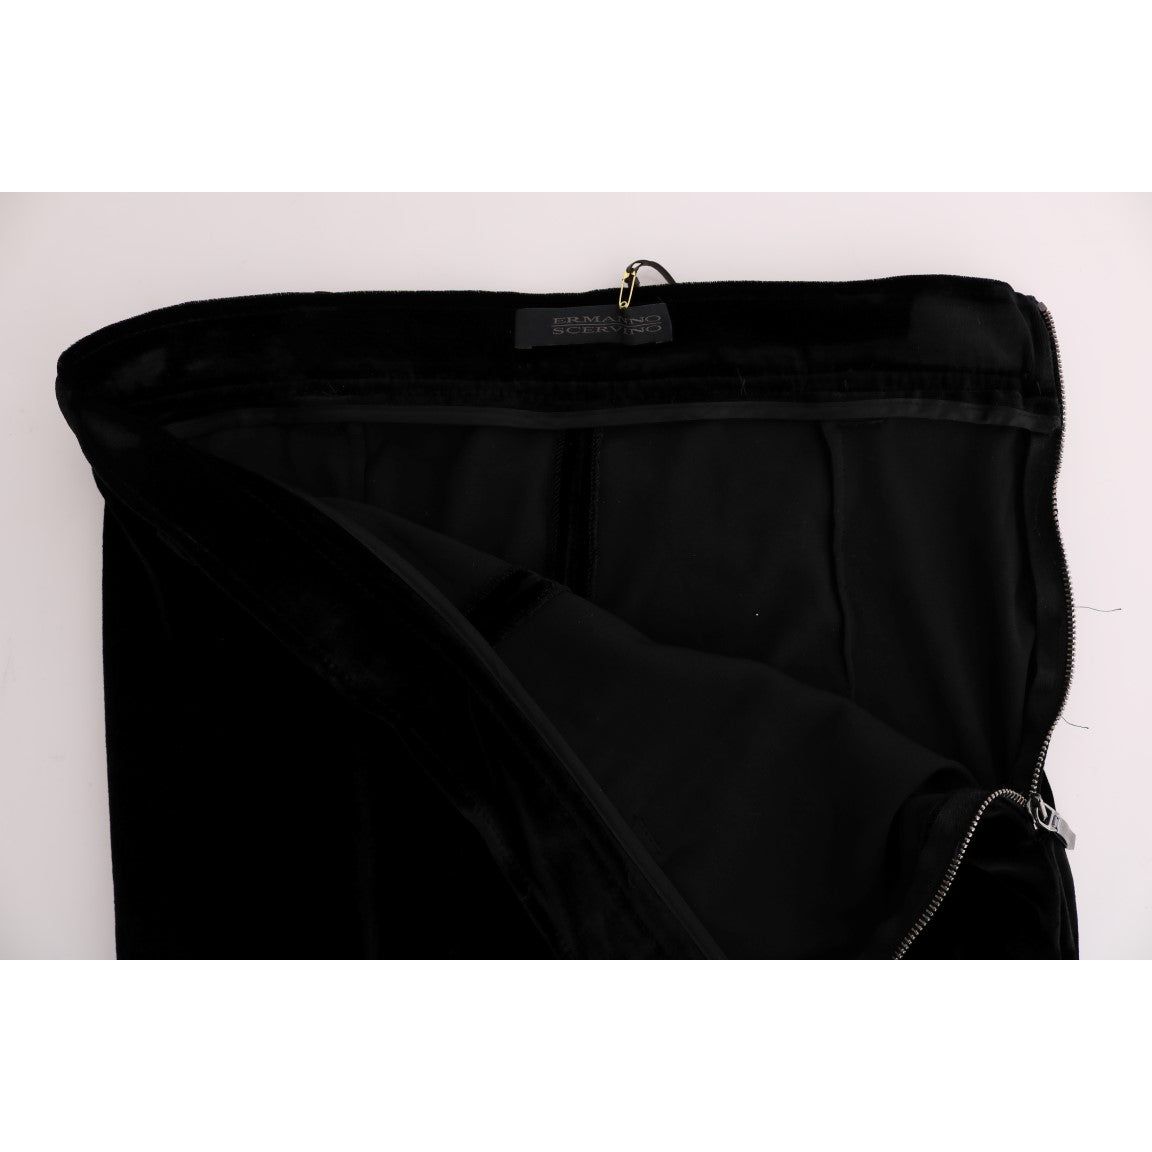 Ermanno Scervino Sleek High-Waist Black Trousers black-velvet-slim-fit-pants Jeans & Pants